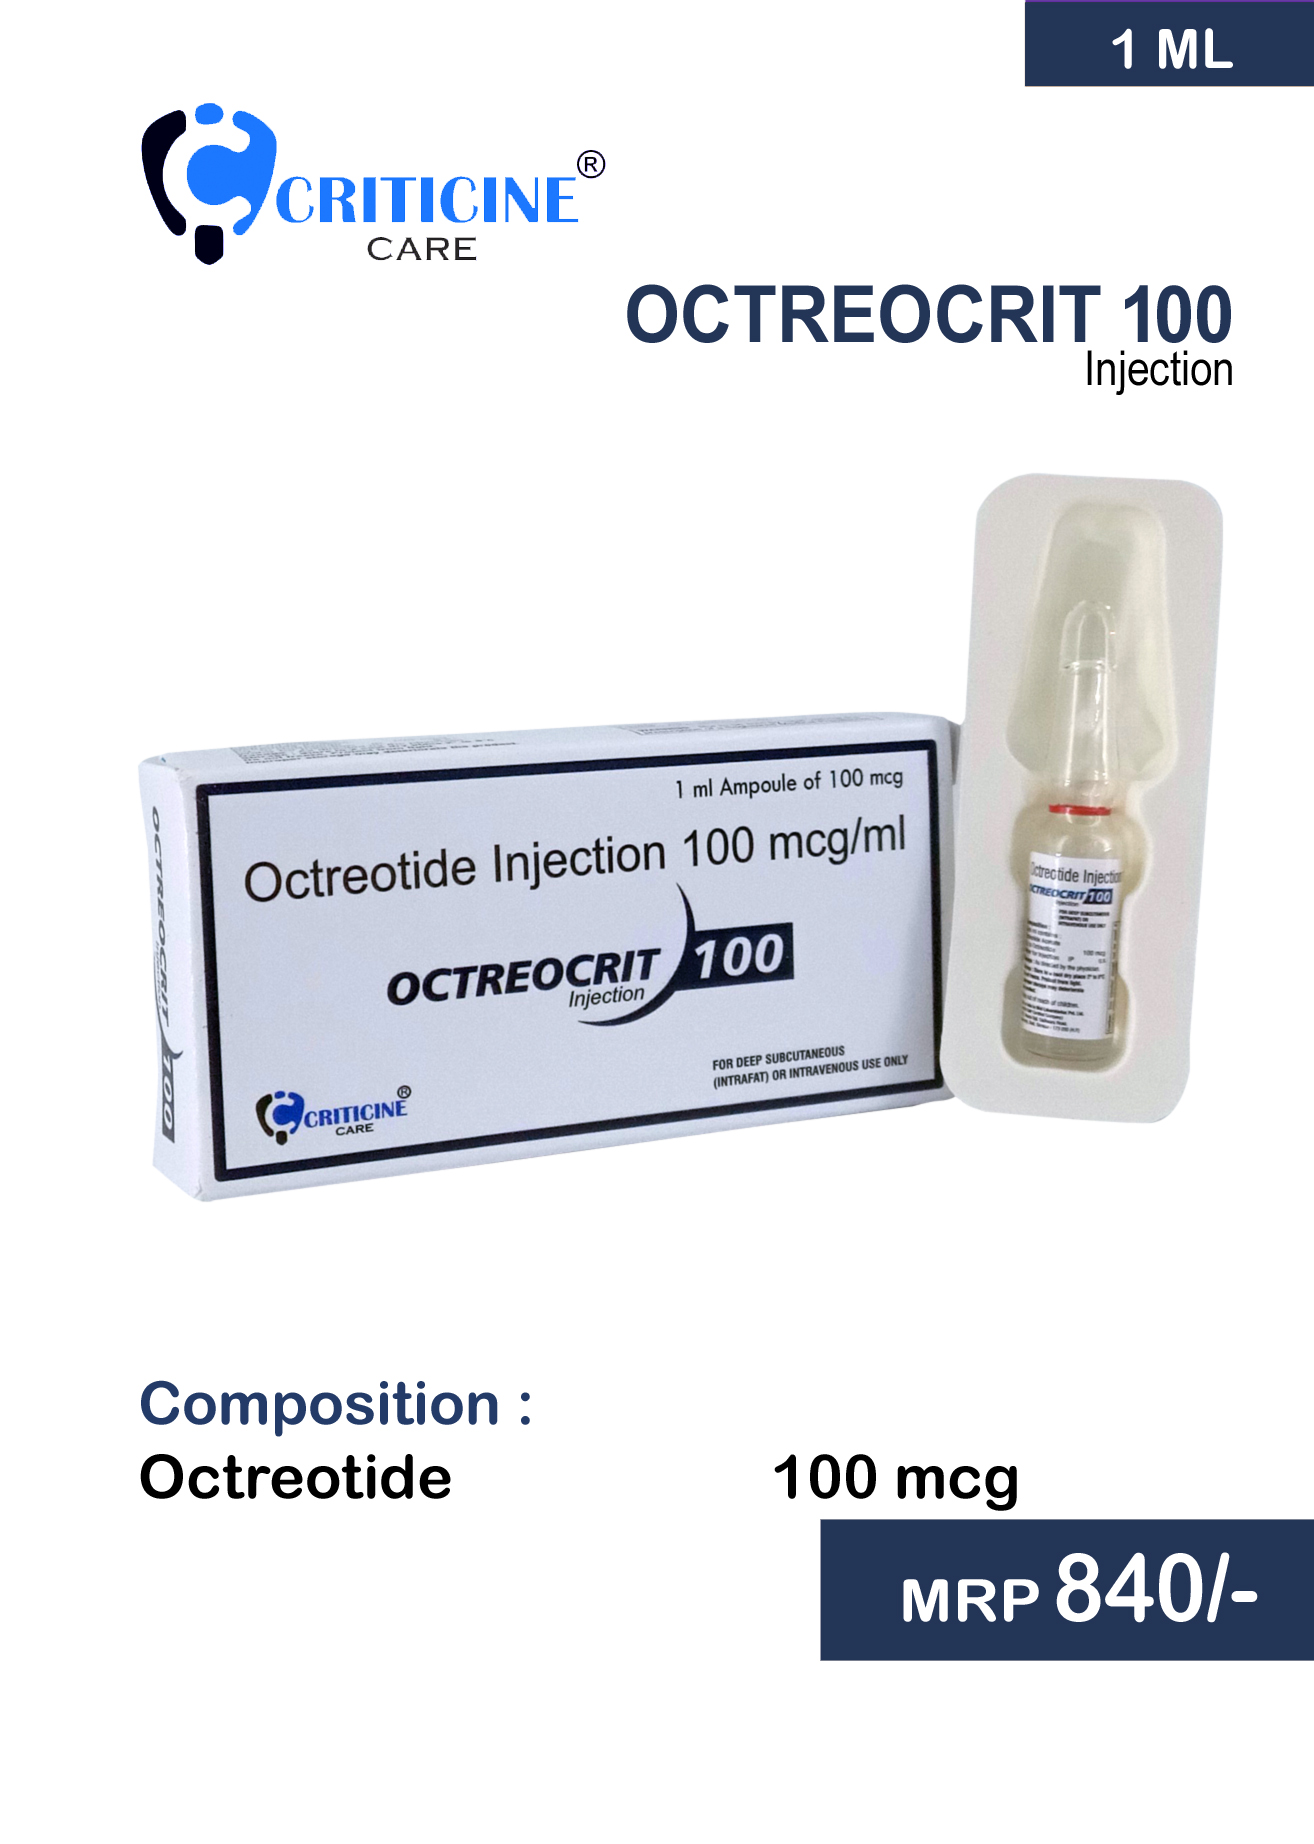 Octreotide injection 100mcg/ml